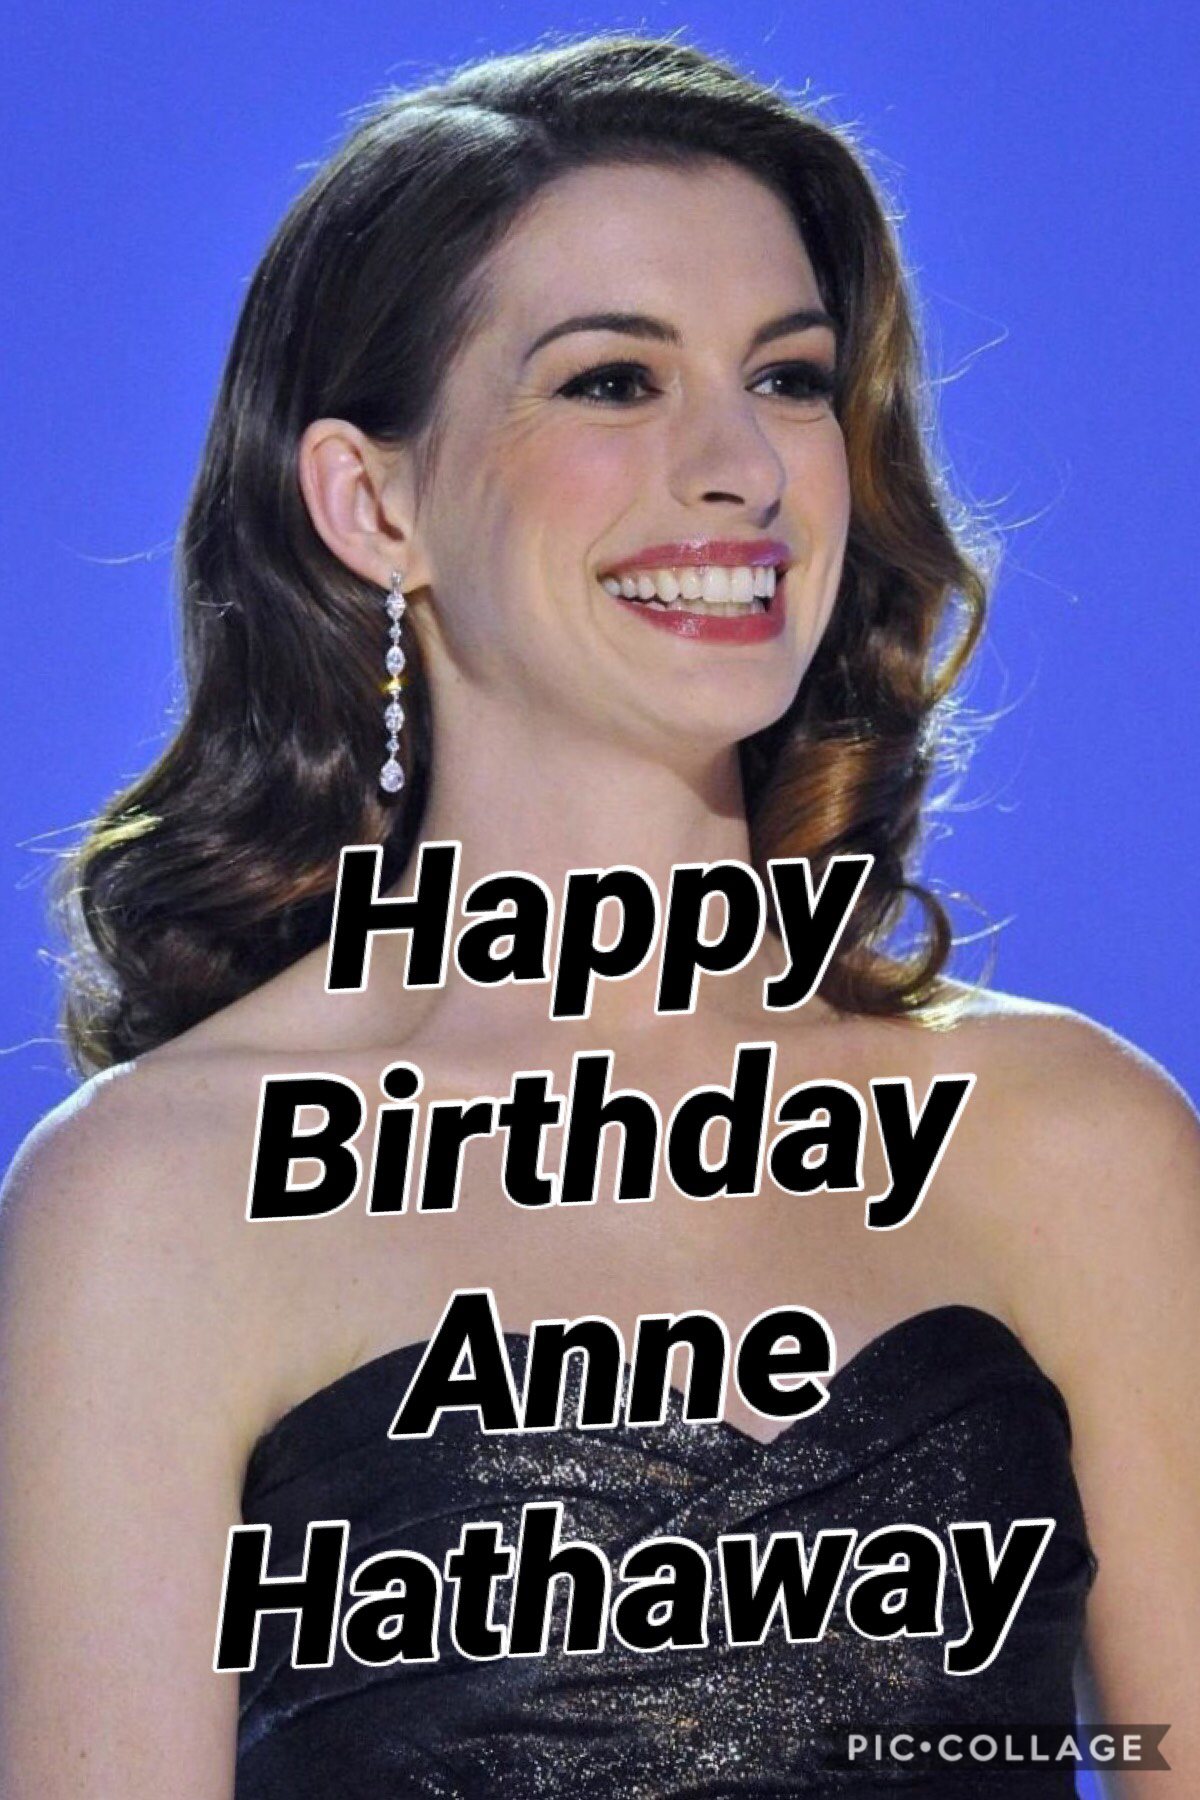 Happy Birthday Anne!!!!